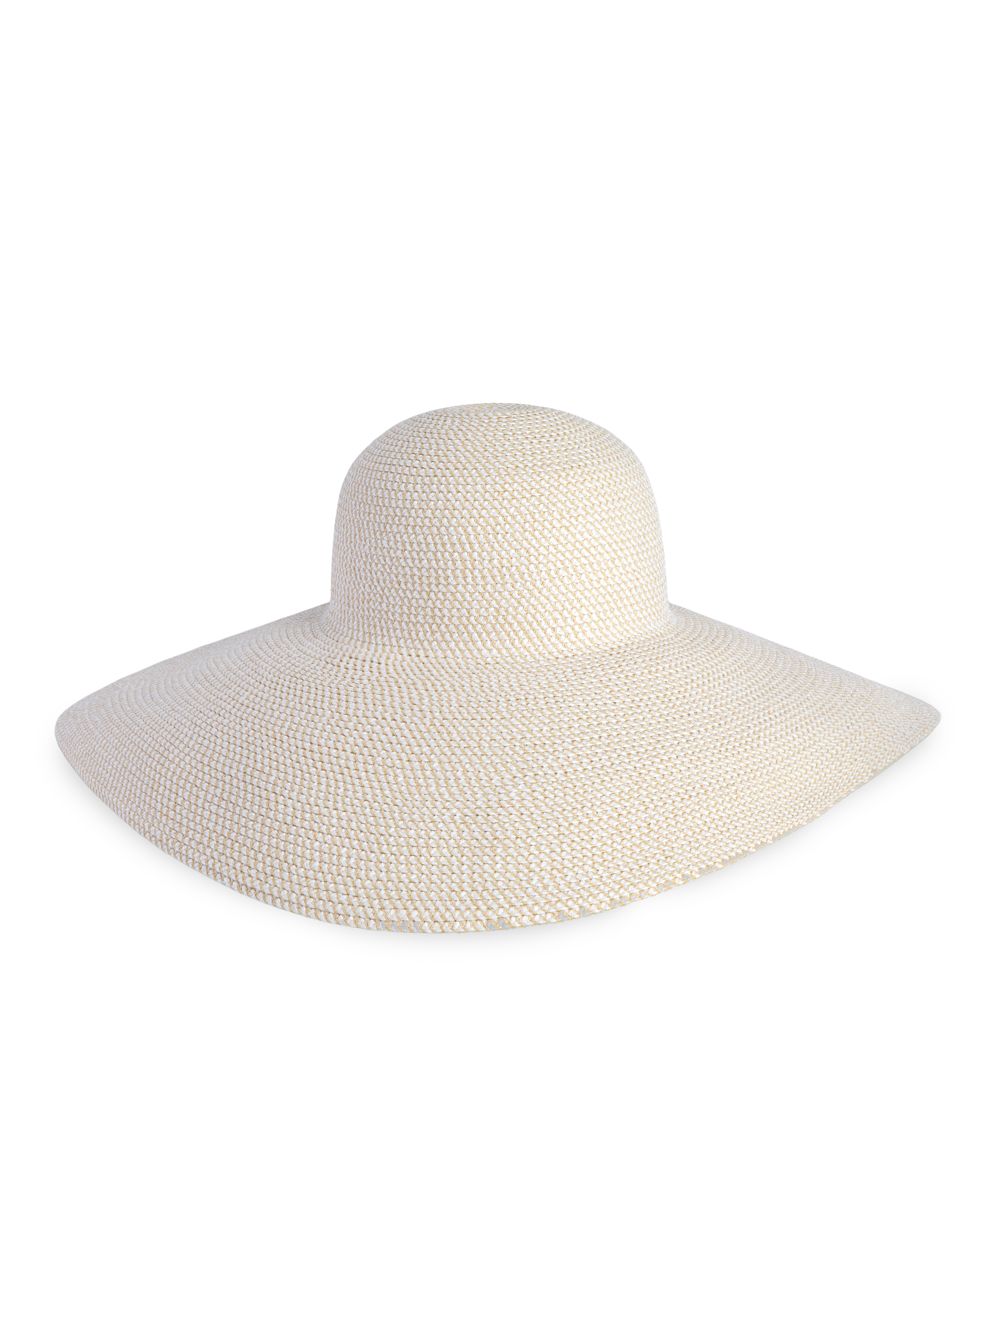 Флоппи-солнцезащитная шляпа Eric Javits, белый